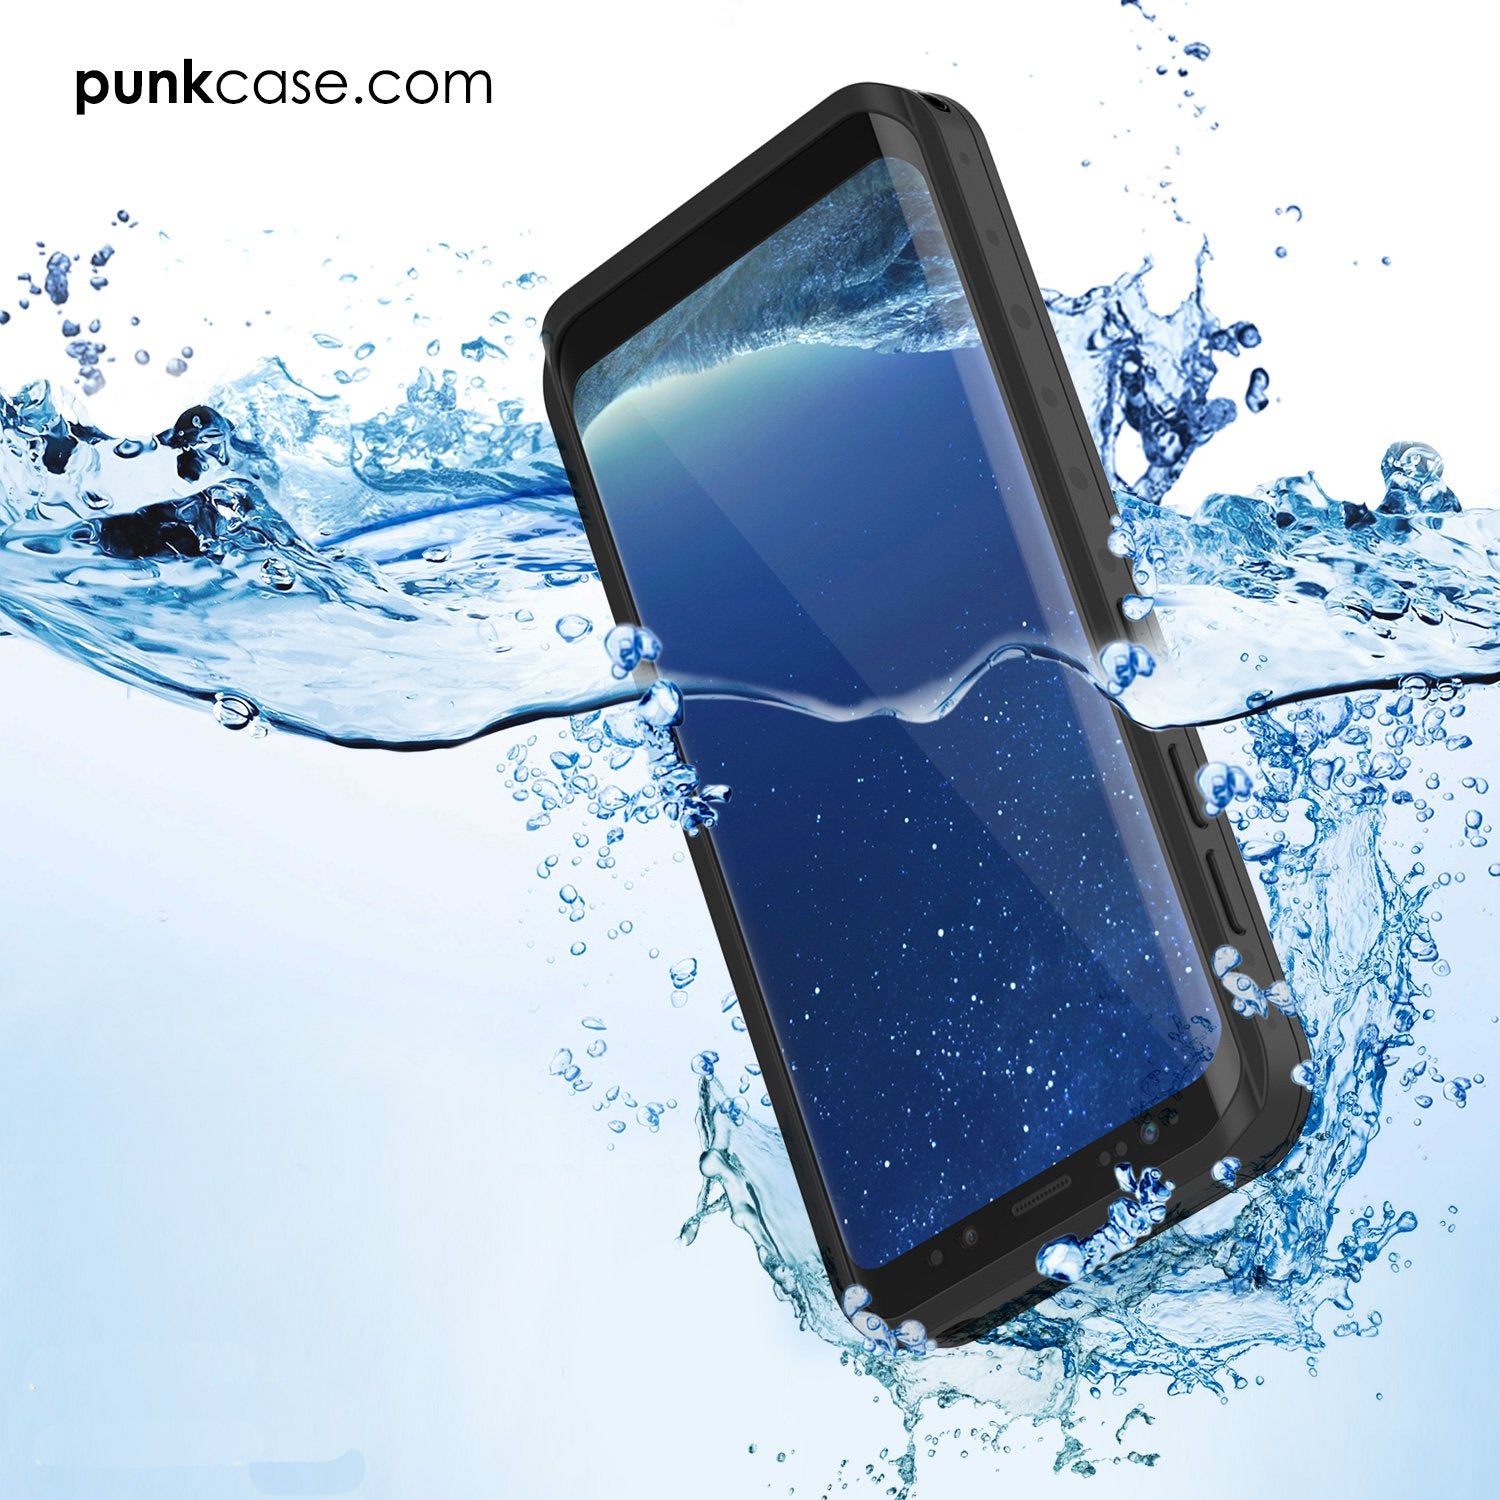 Galaxy S8 Waterproof Case PunkCase StudStar Black Thin 6.6ft Underwater IP68 Shock/Snow Proof